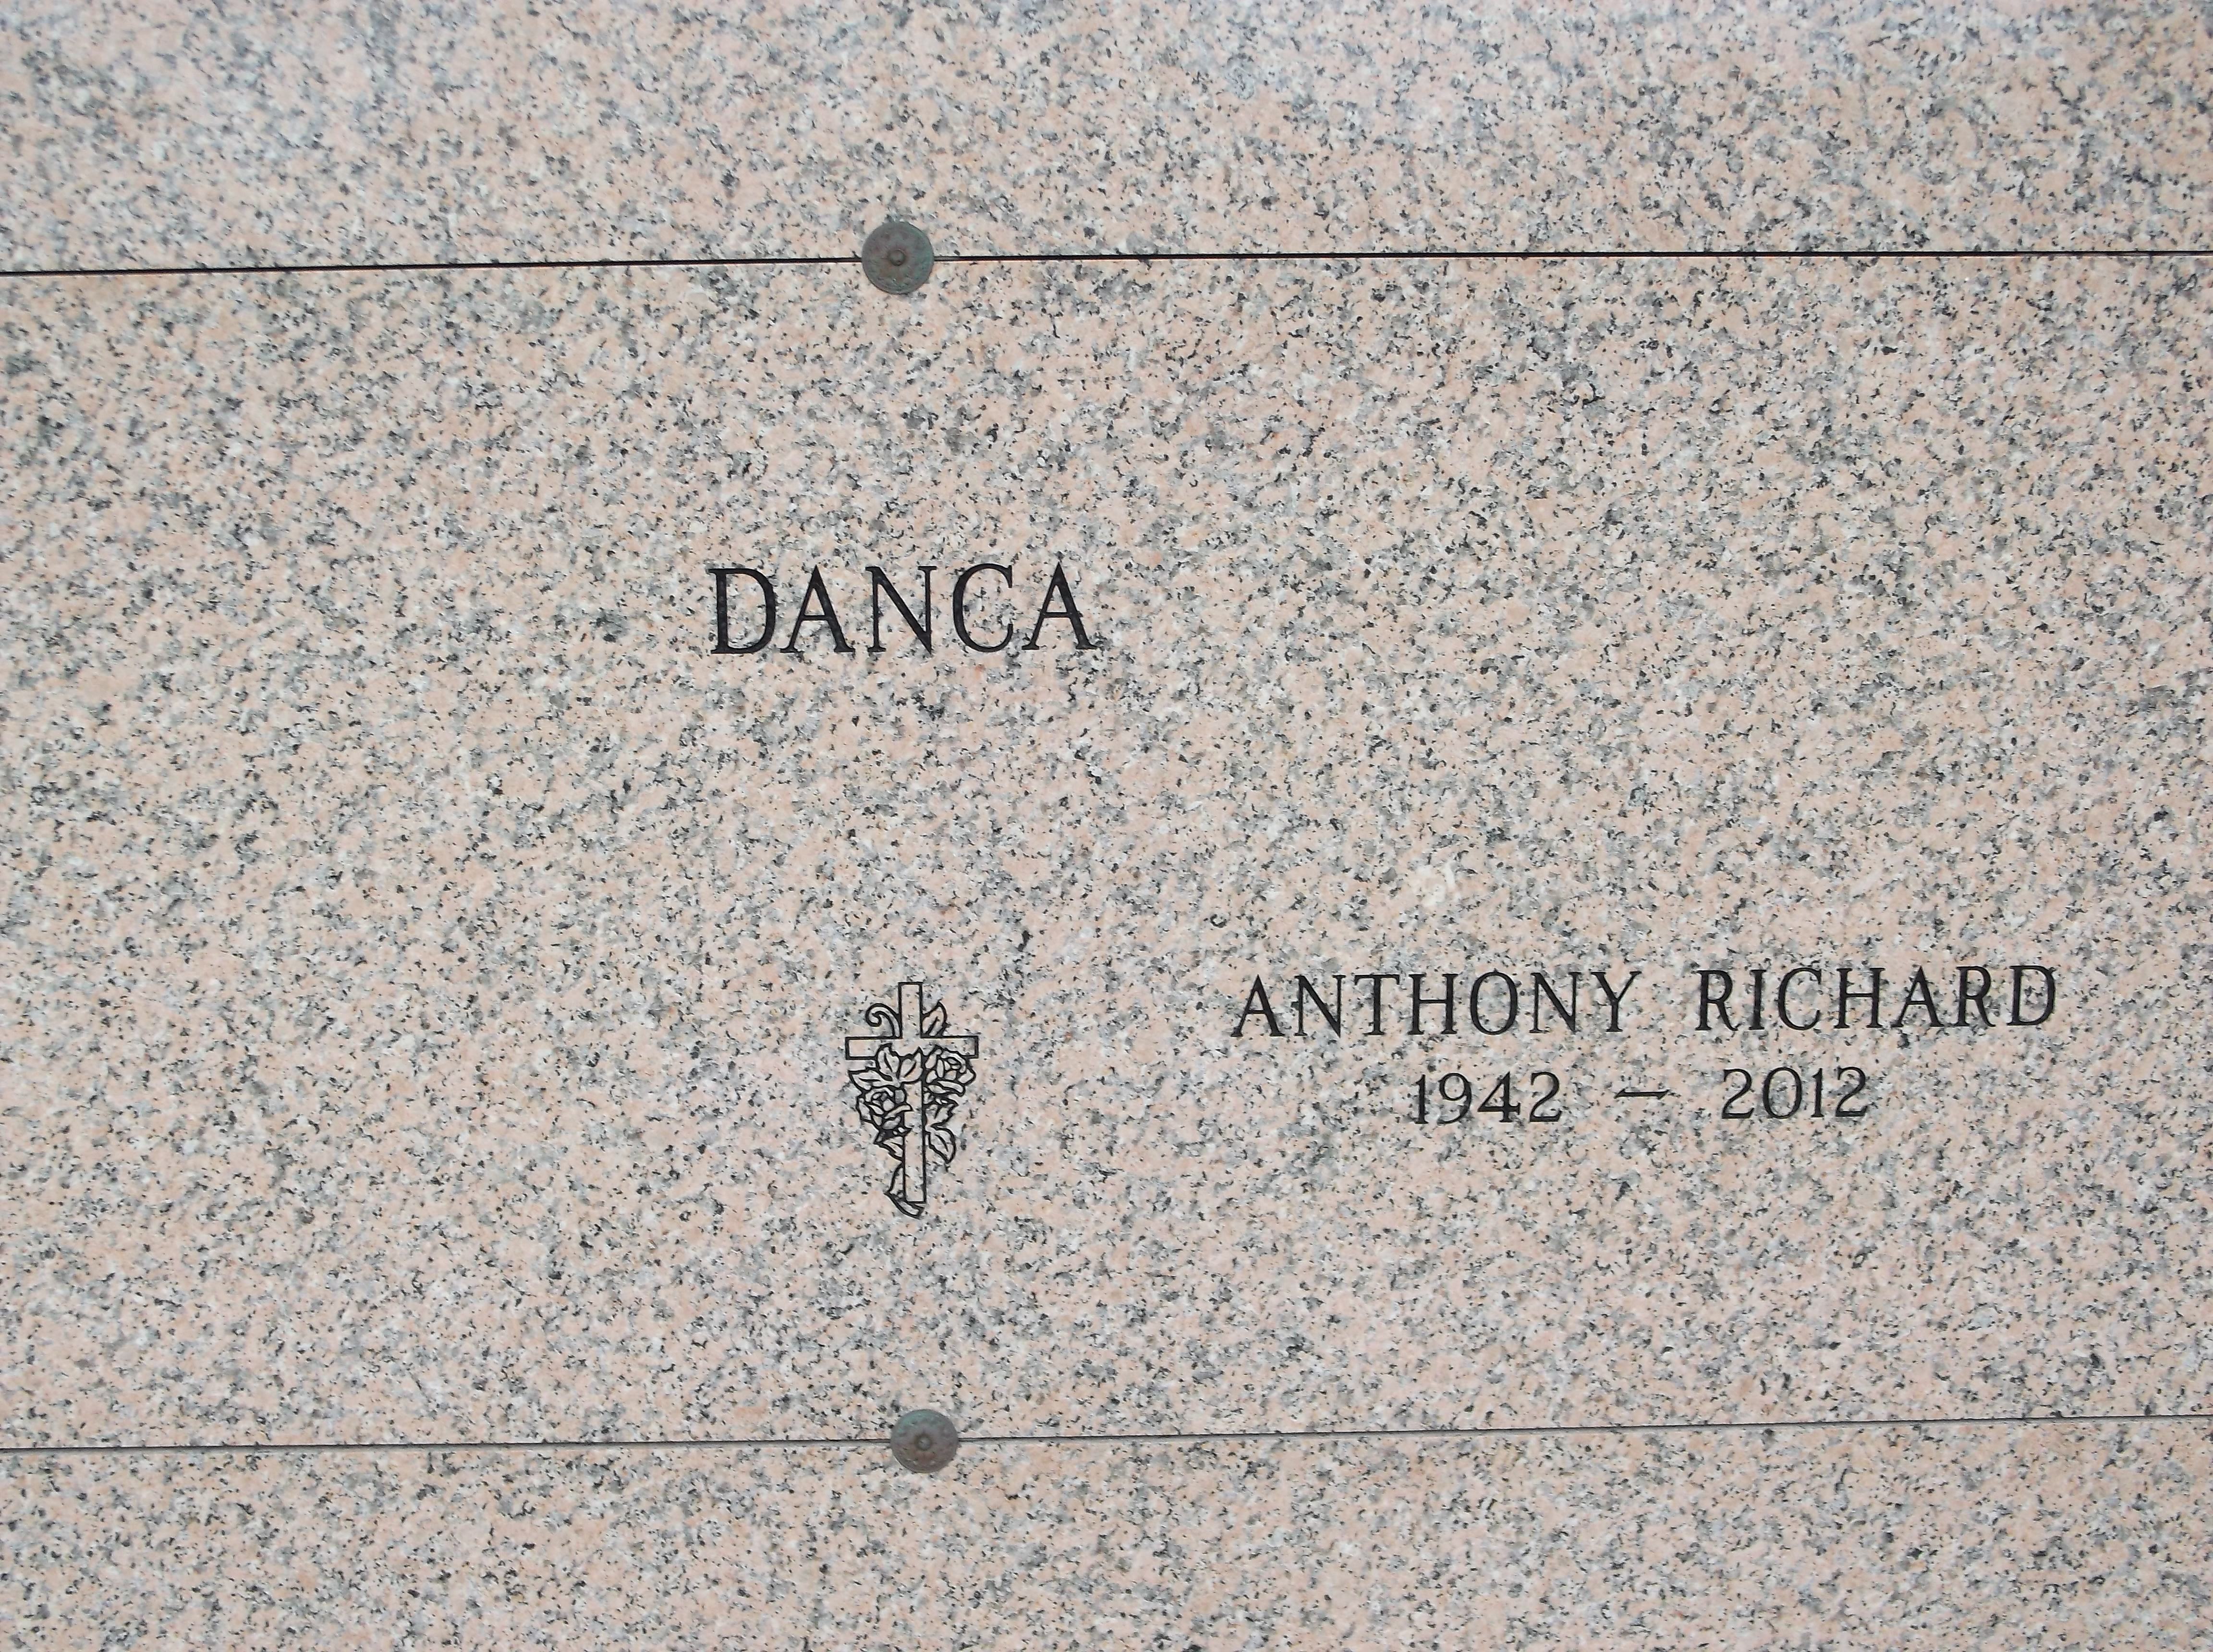 Anthony Richard Danca